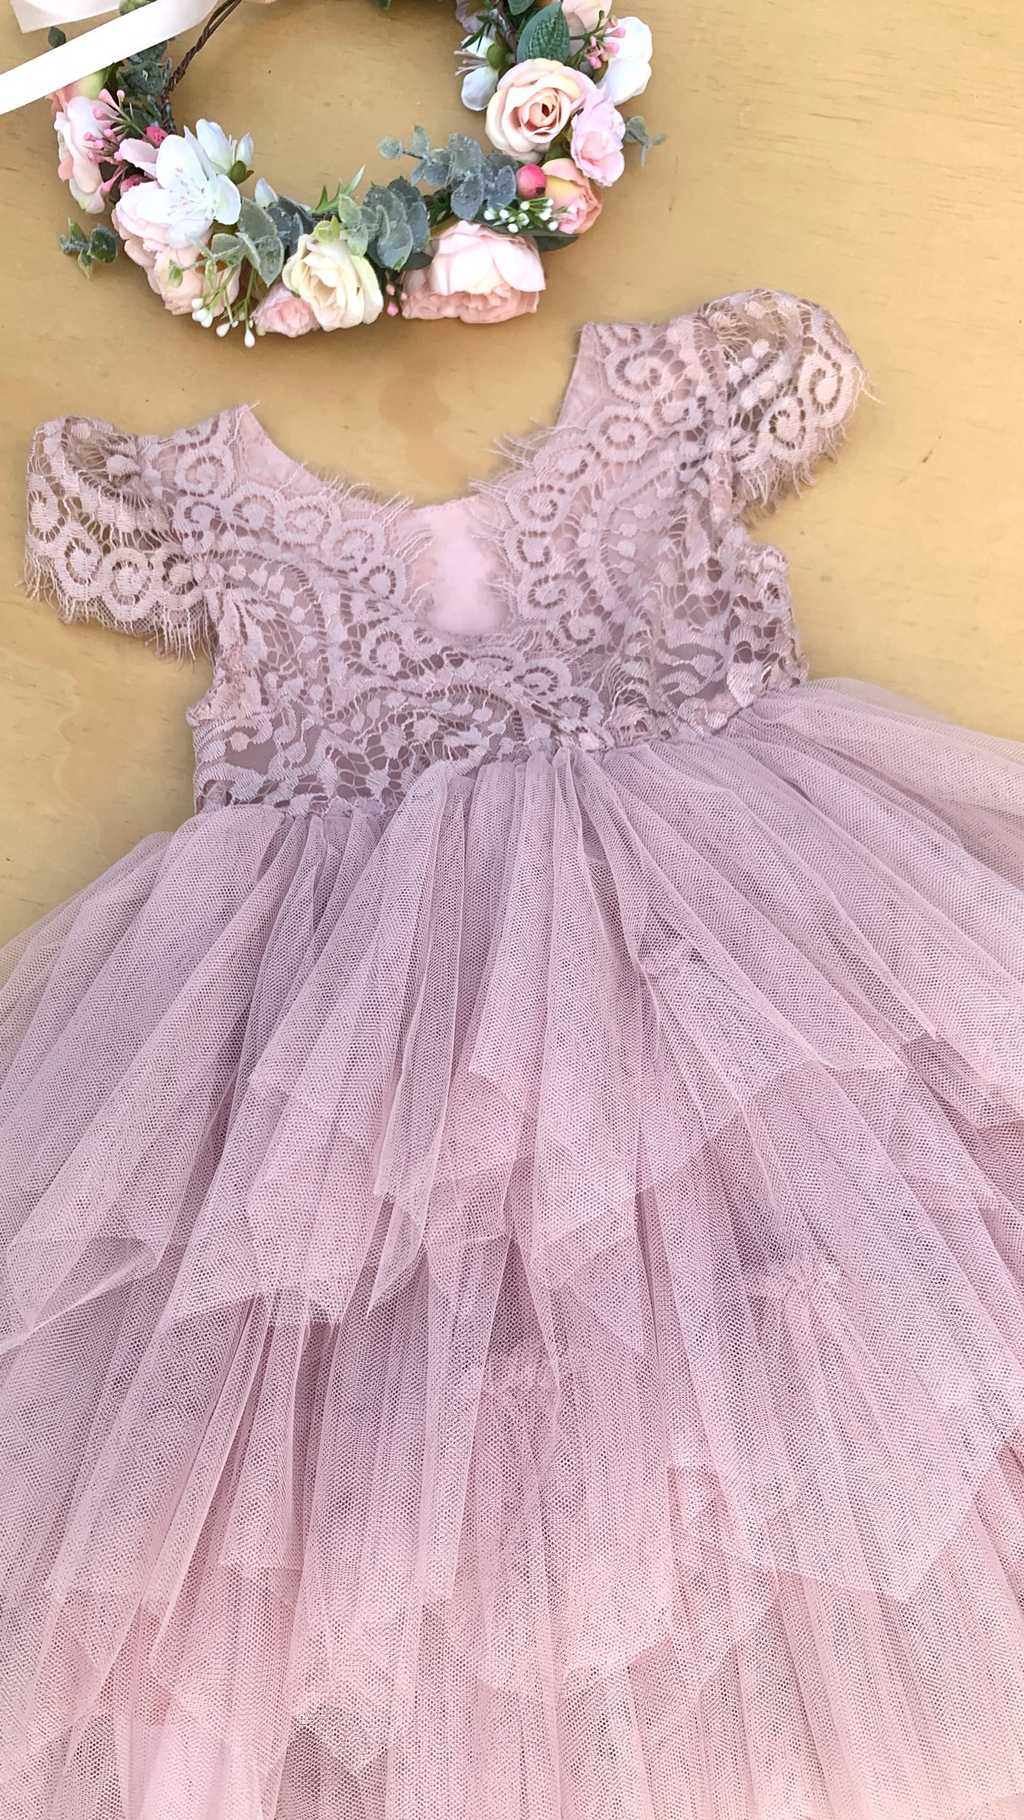 Felicity Capped Sleeve Dusty Pink Girls Dress - Baby Girl Cake Smash Dresses